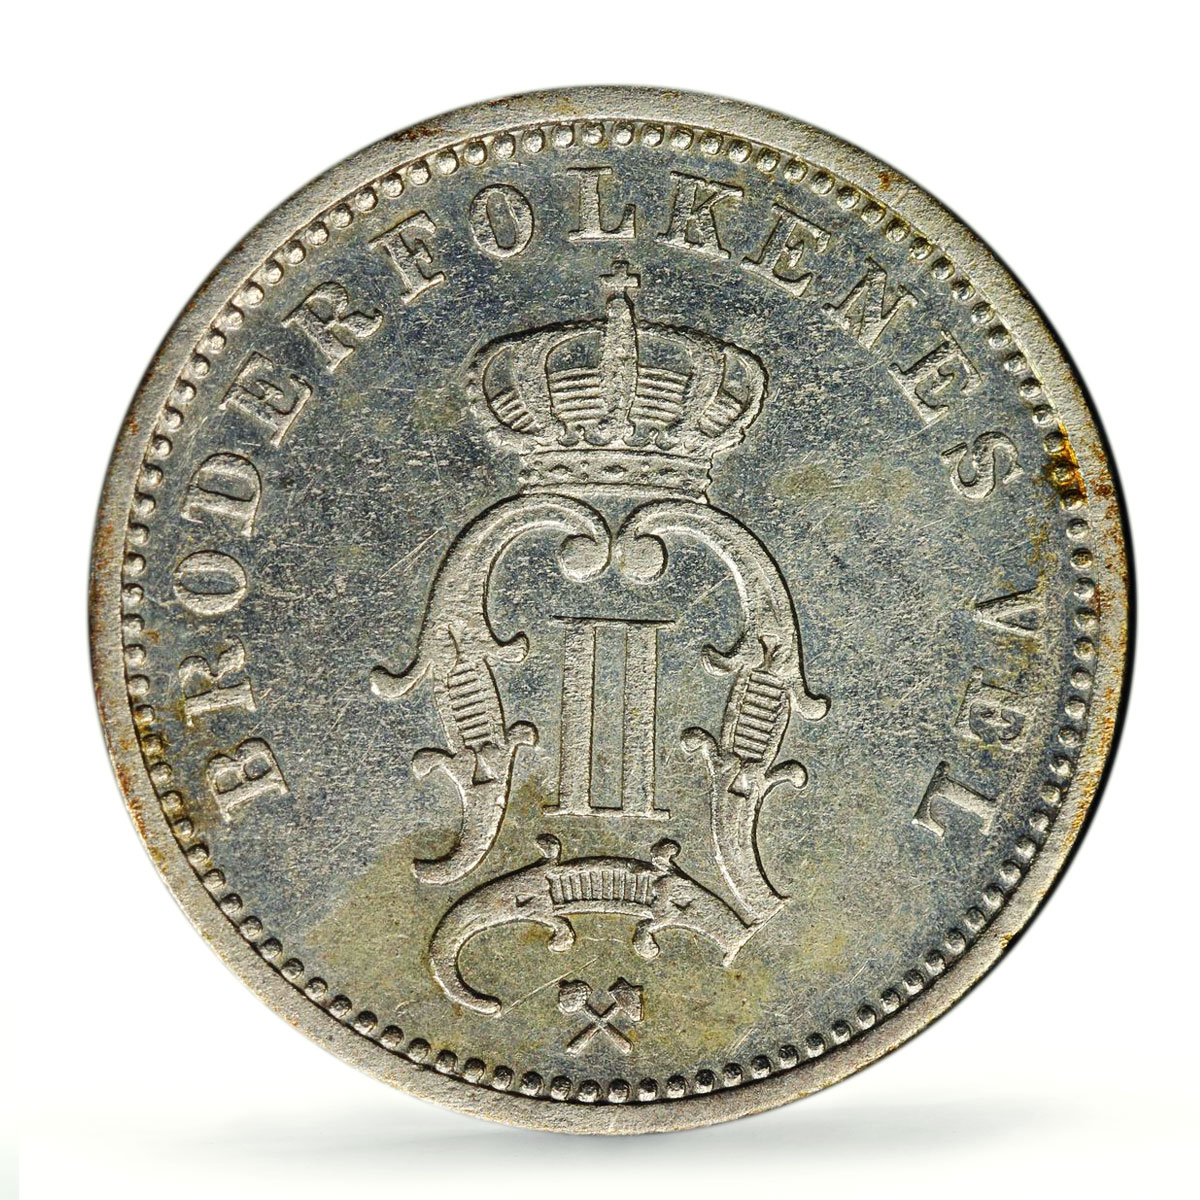 Norway 10 ore Regular Coinage King Oscar II KM-350 AU PCGS billon coin 1903